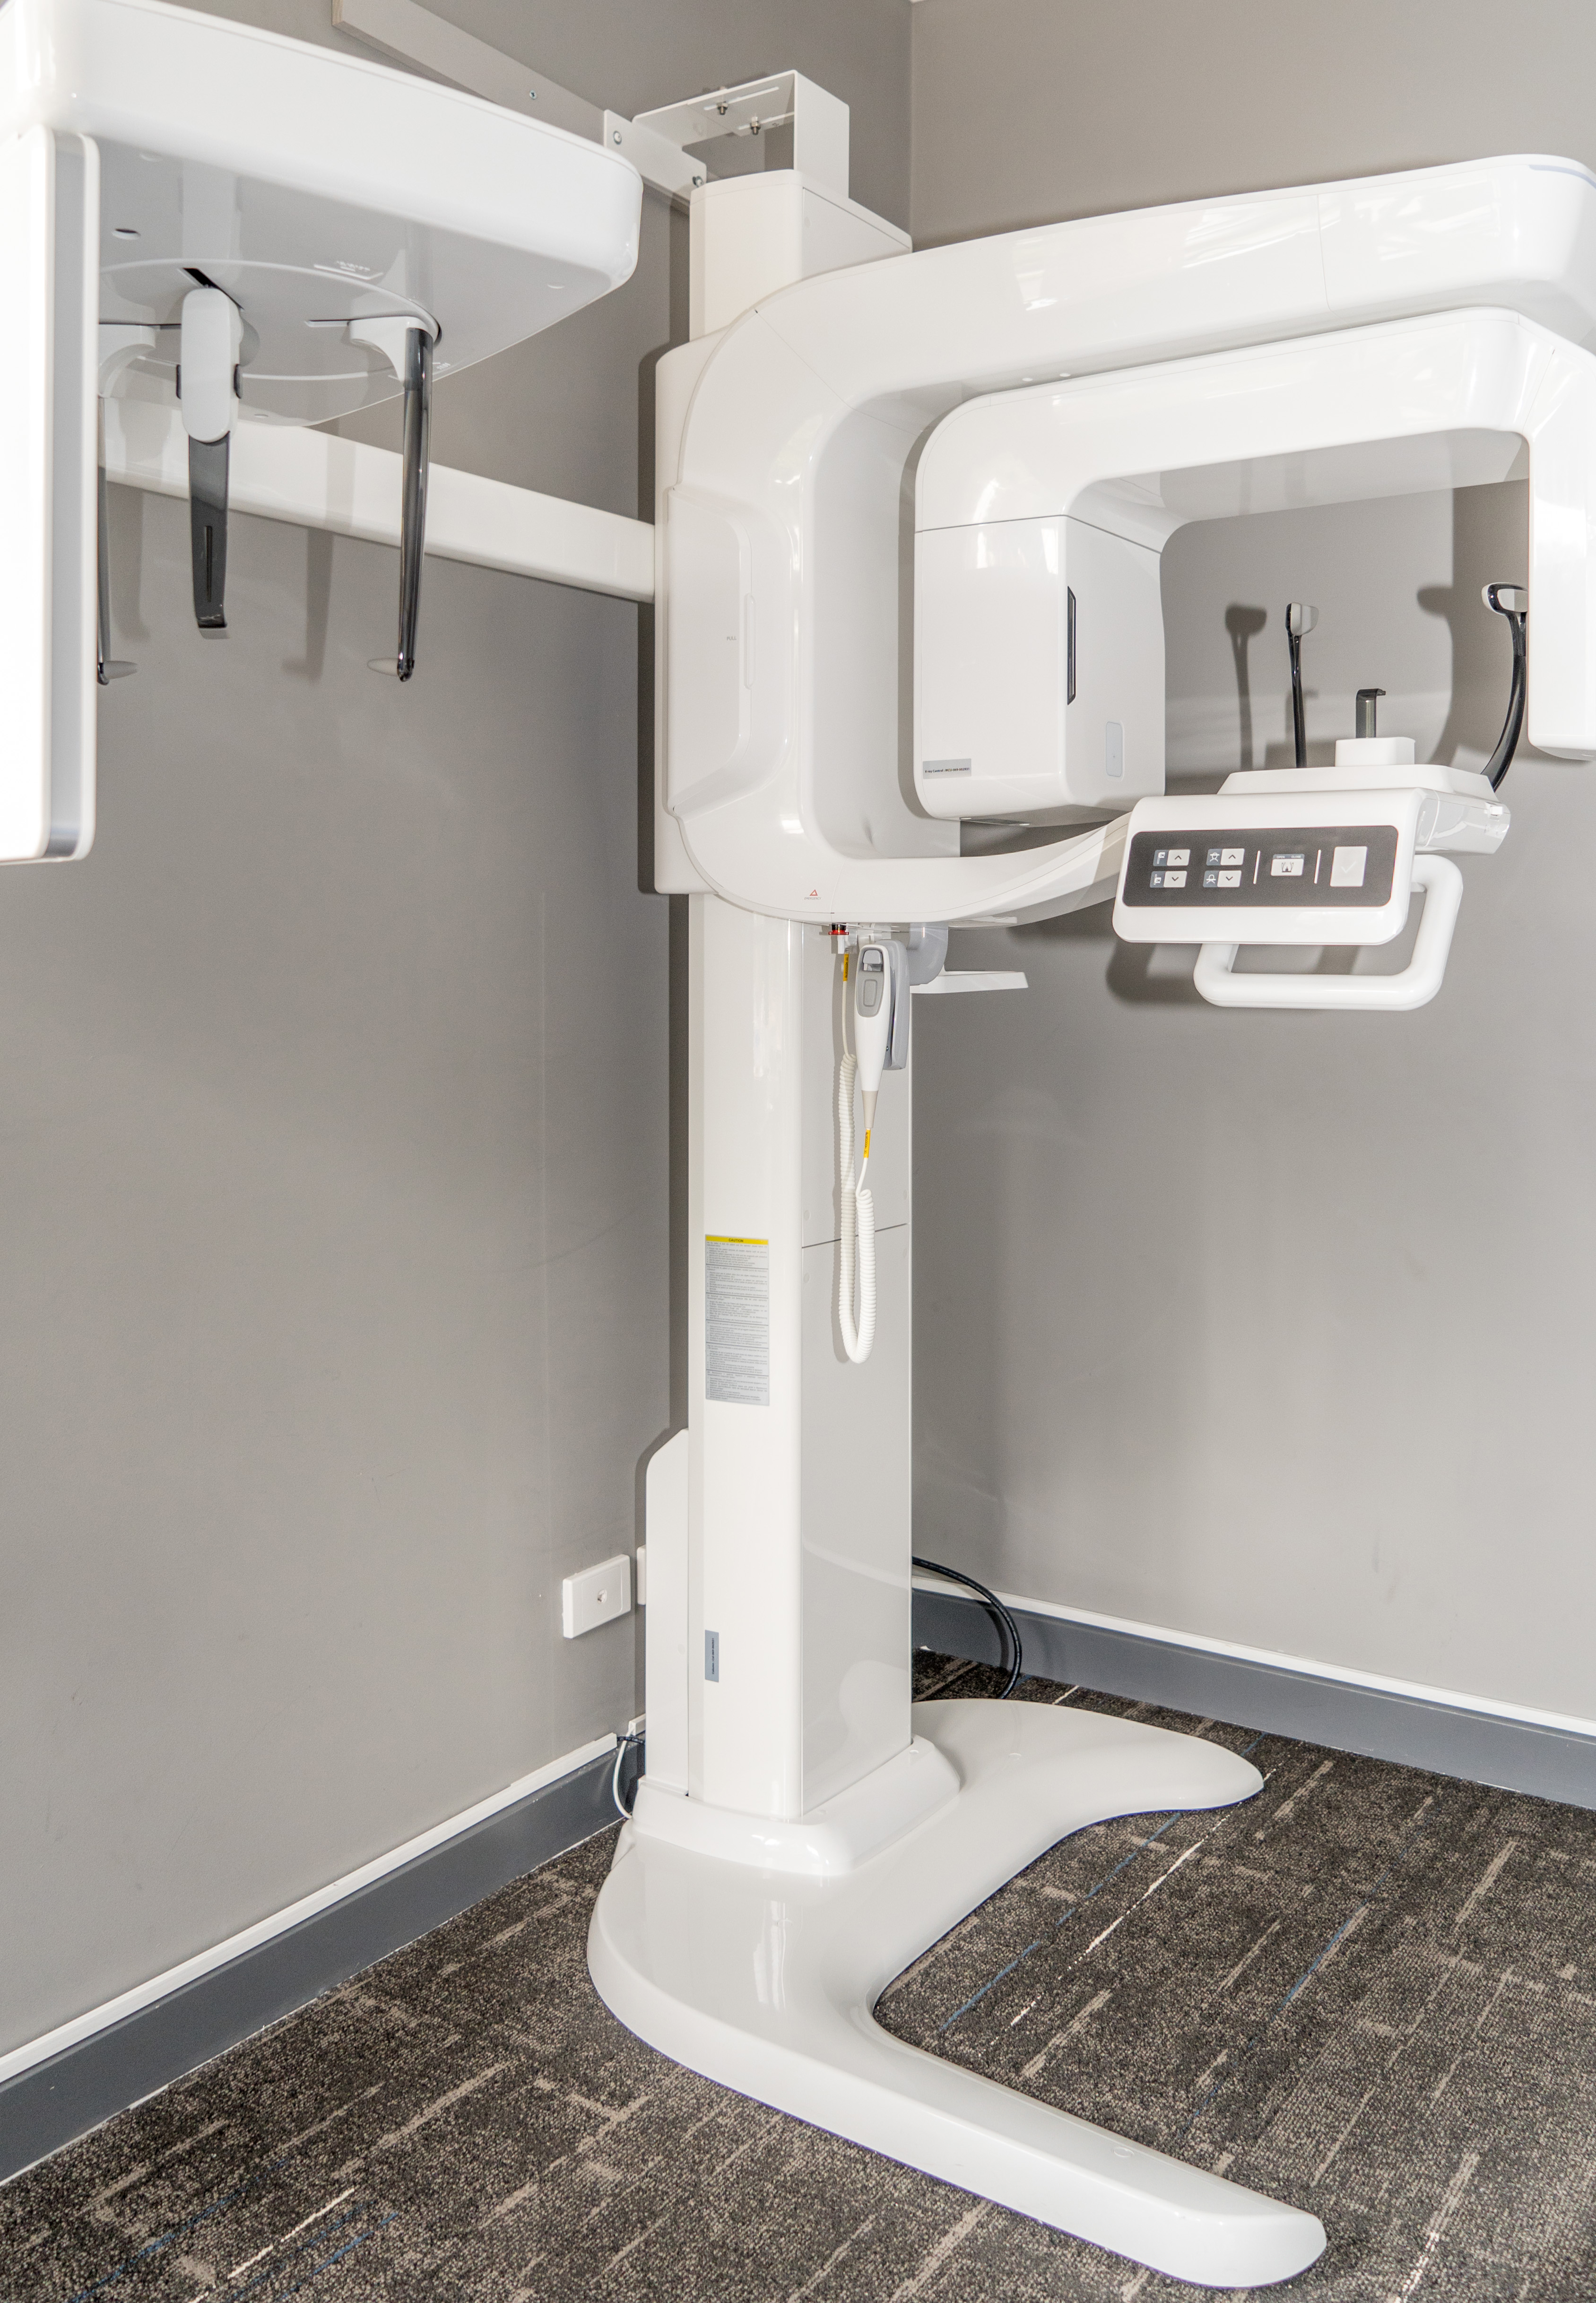 Digital X-Ray machine at Vogue Dental Studios.